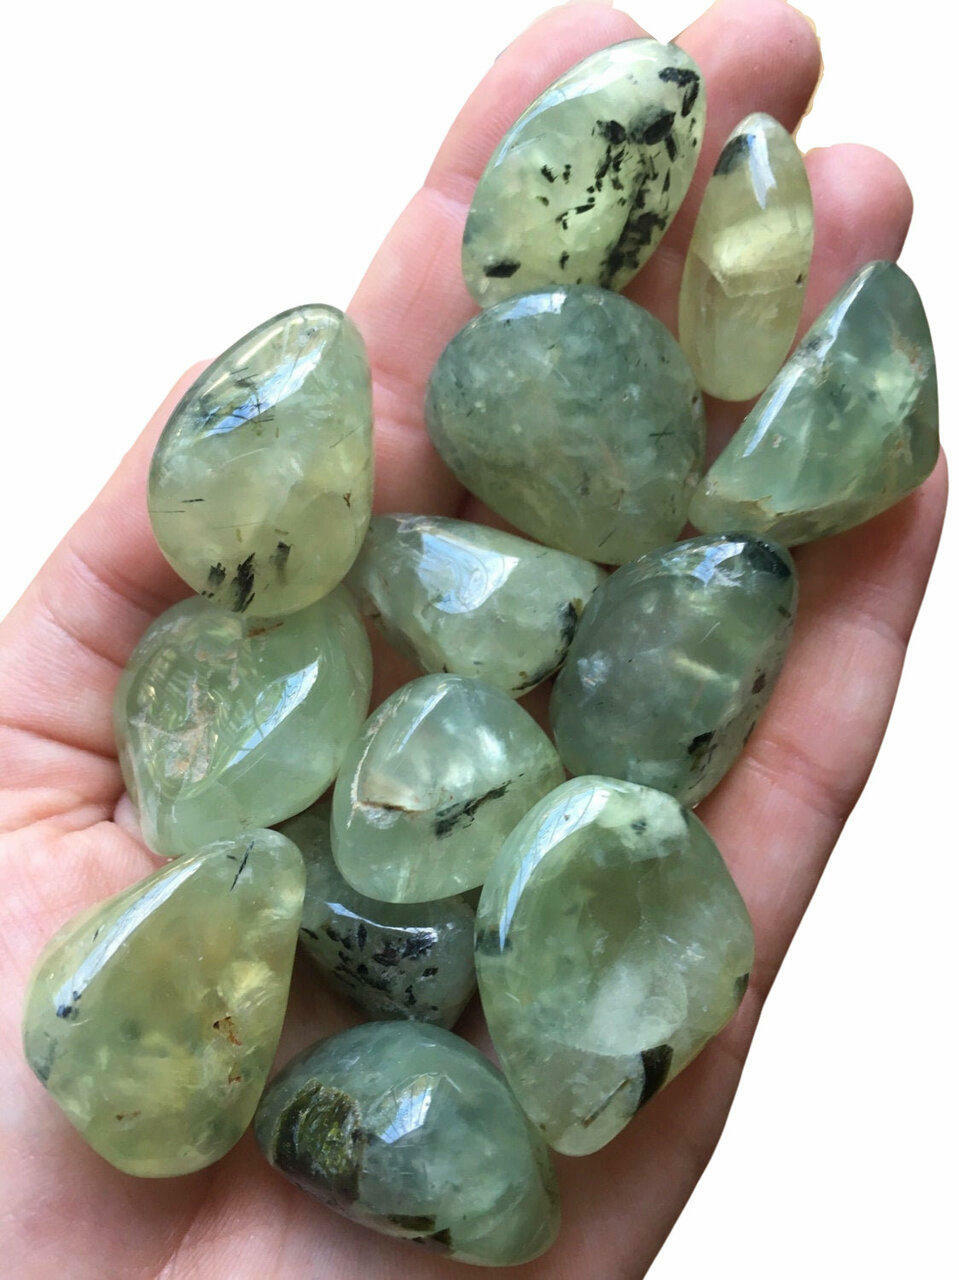 Thirteen prehnite stones placed on the hand